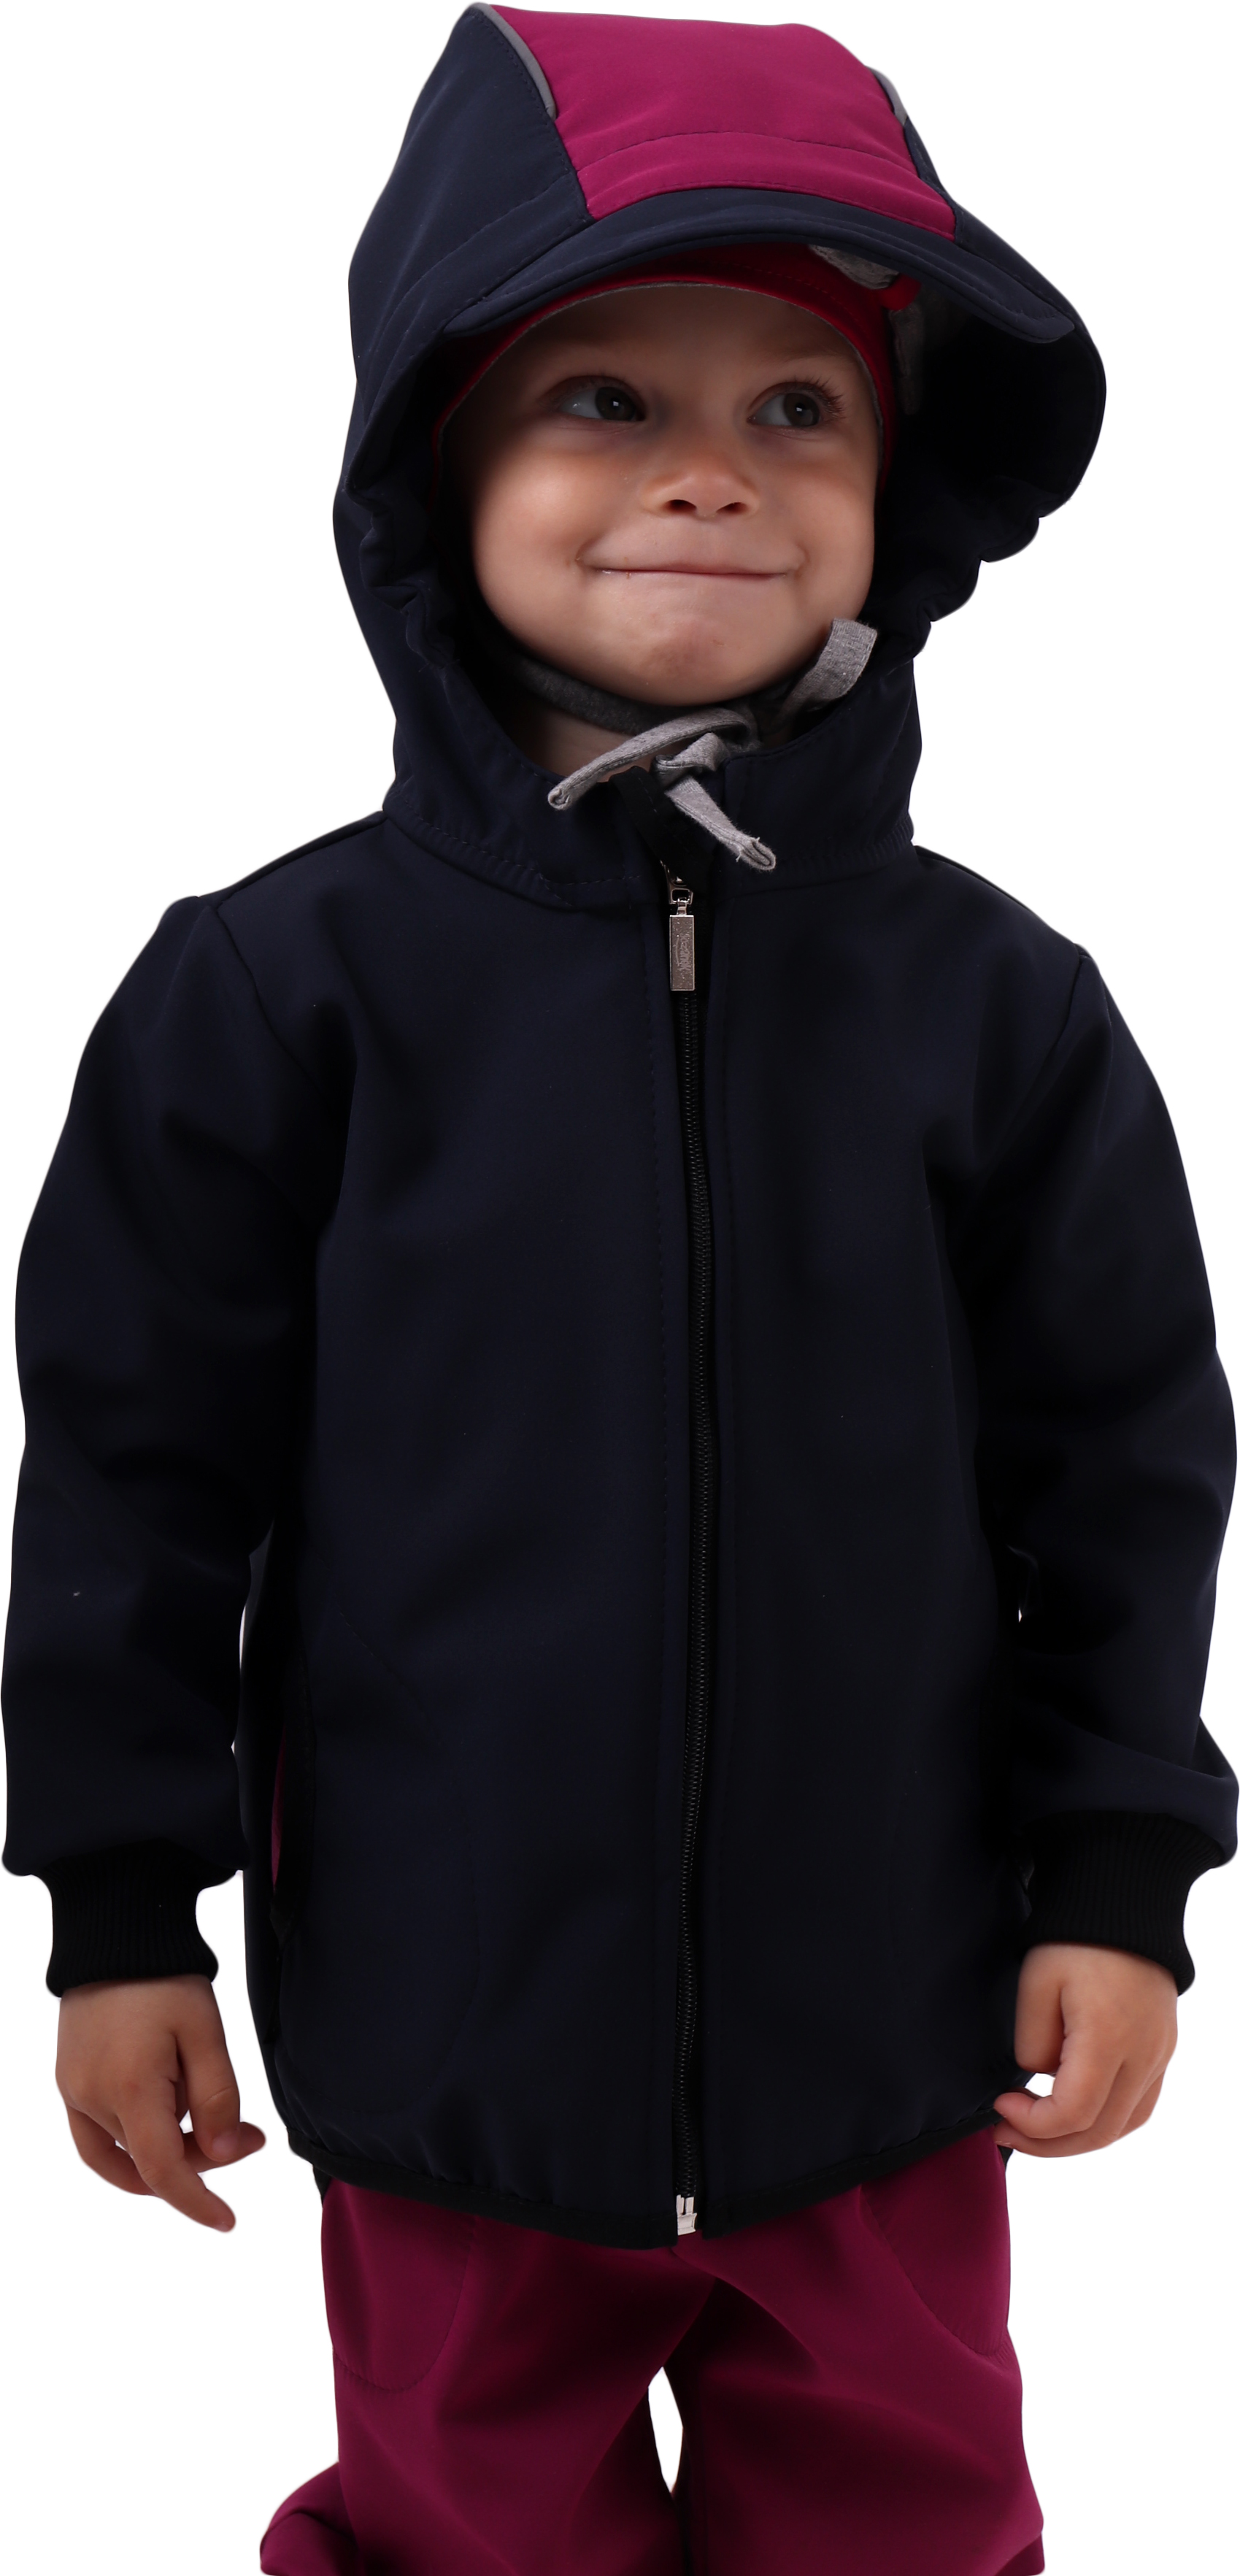 Detská softshellová bunda, tmavo modrá s fuksiovými doplnkami, Kolekcia 2020